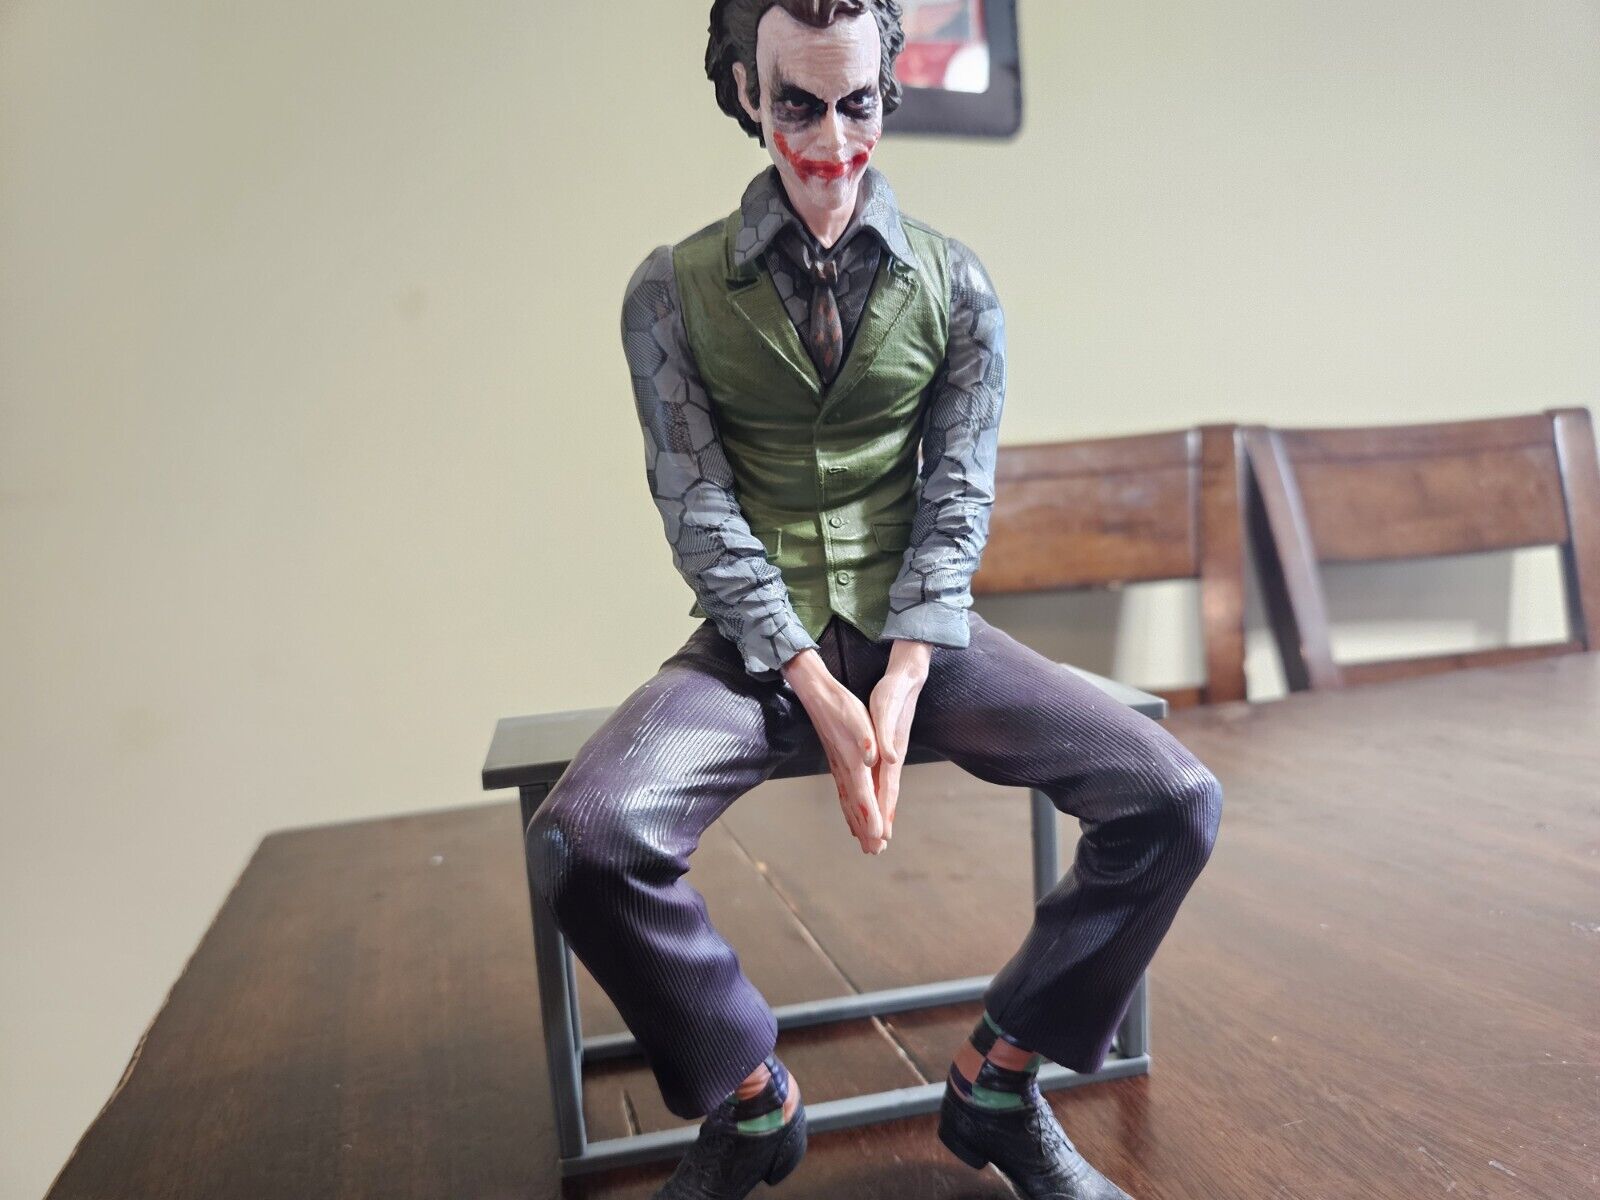 Batman The Dark Knight Joker Sitting Figure Statue Model Toy